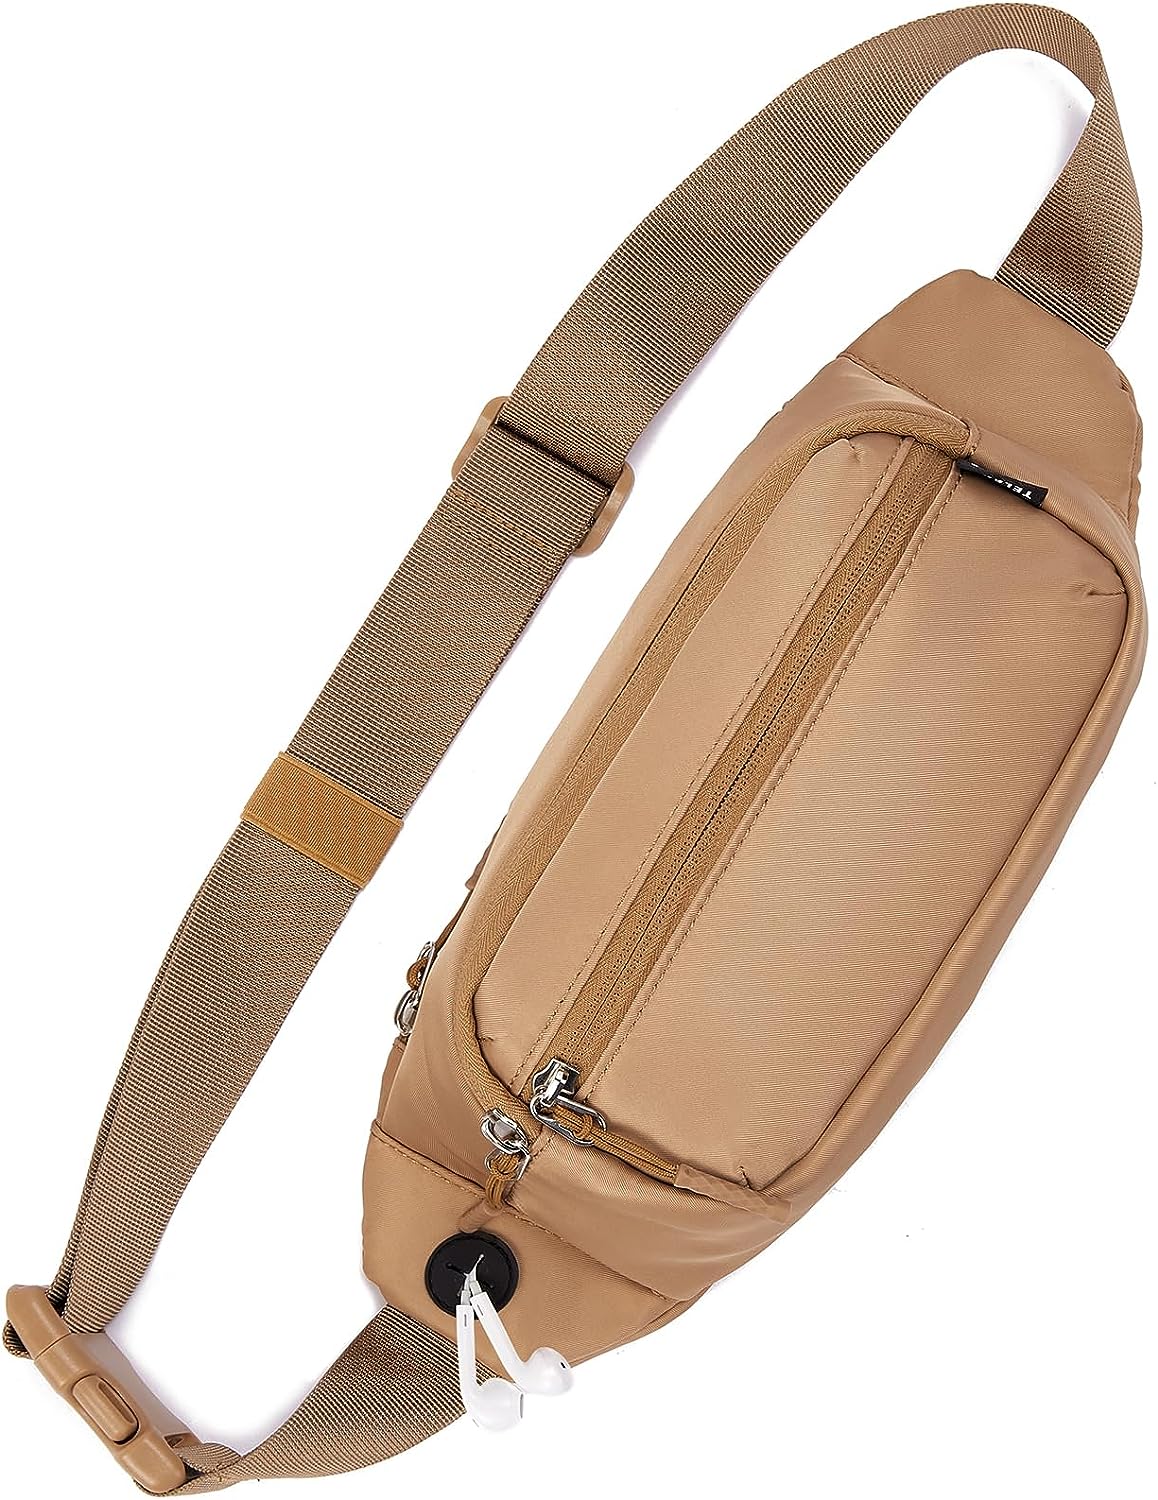 Belt Bag for Women and Men, Fashionable Fanny Packs